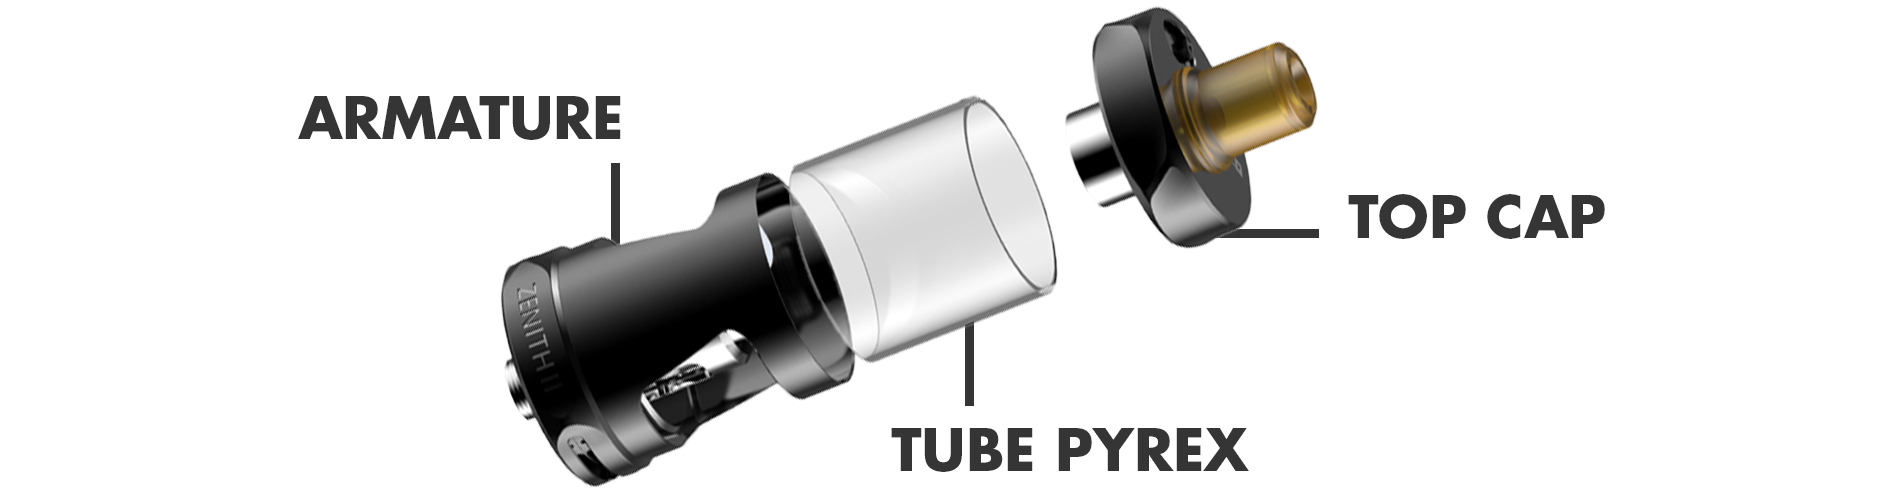 Tube pyrex Zenith II Innokin